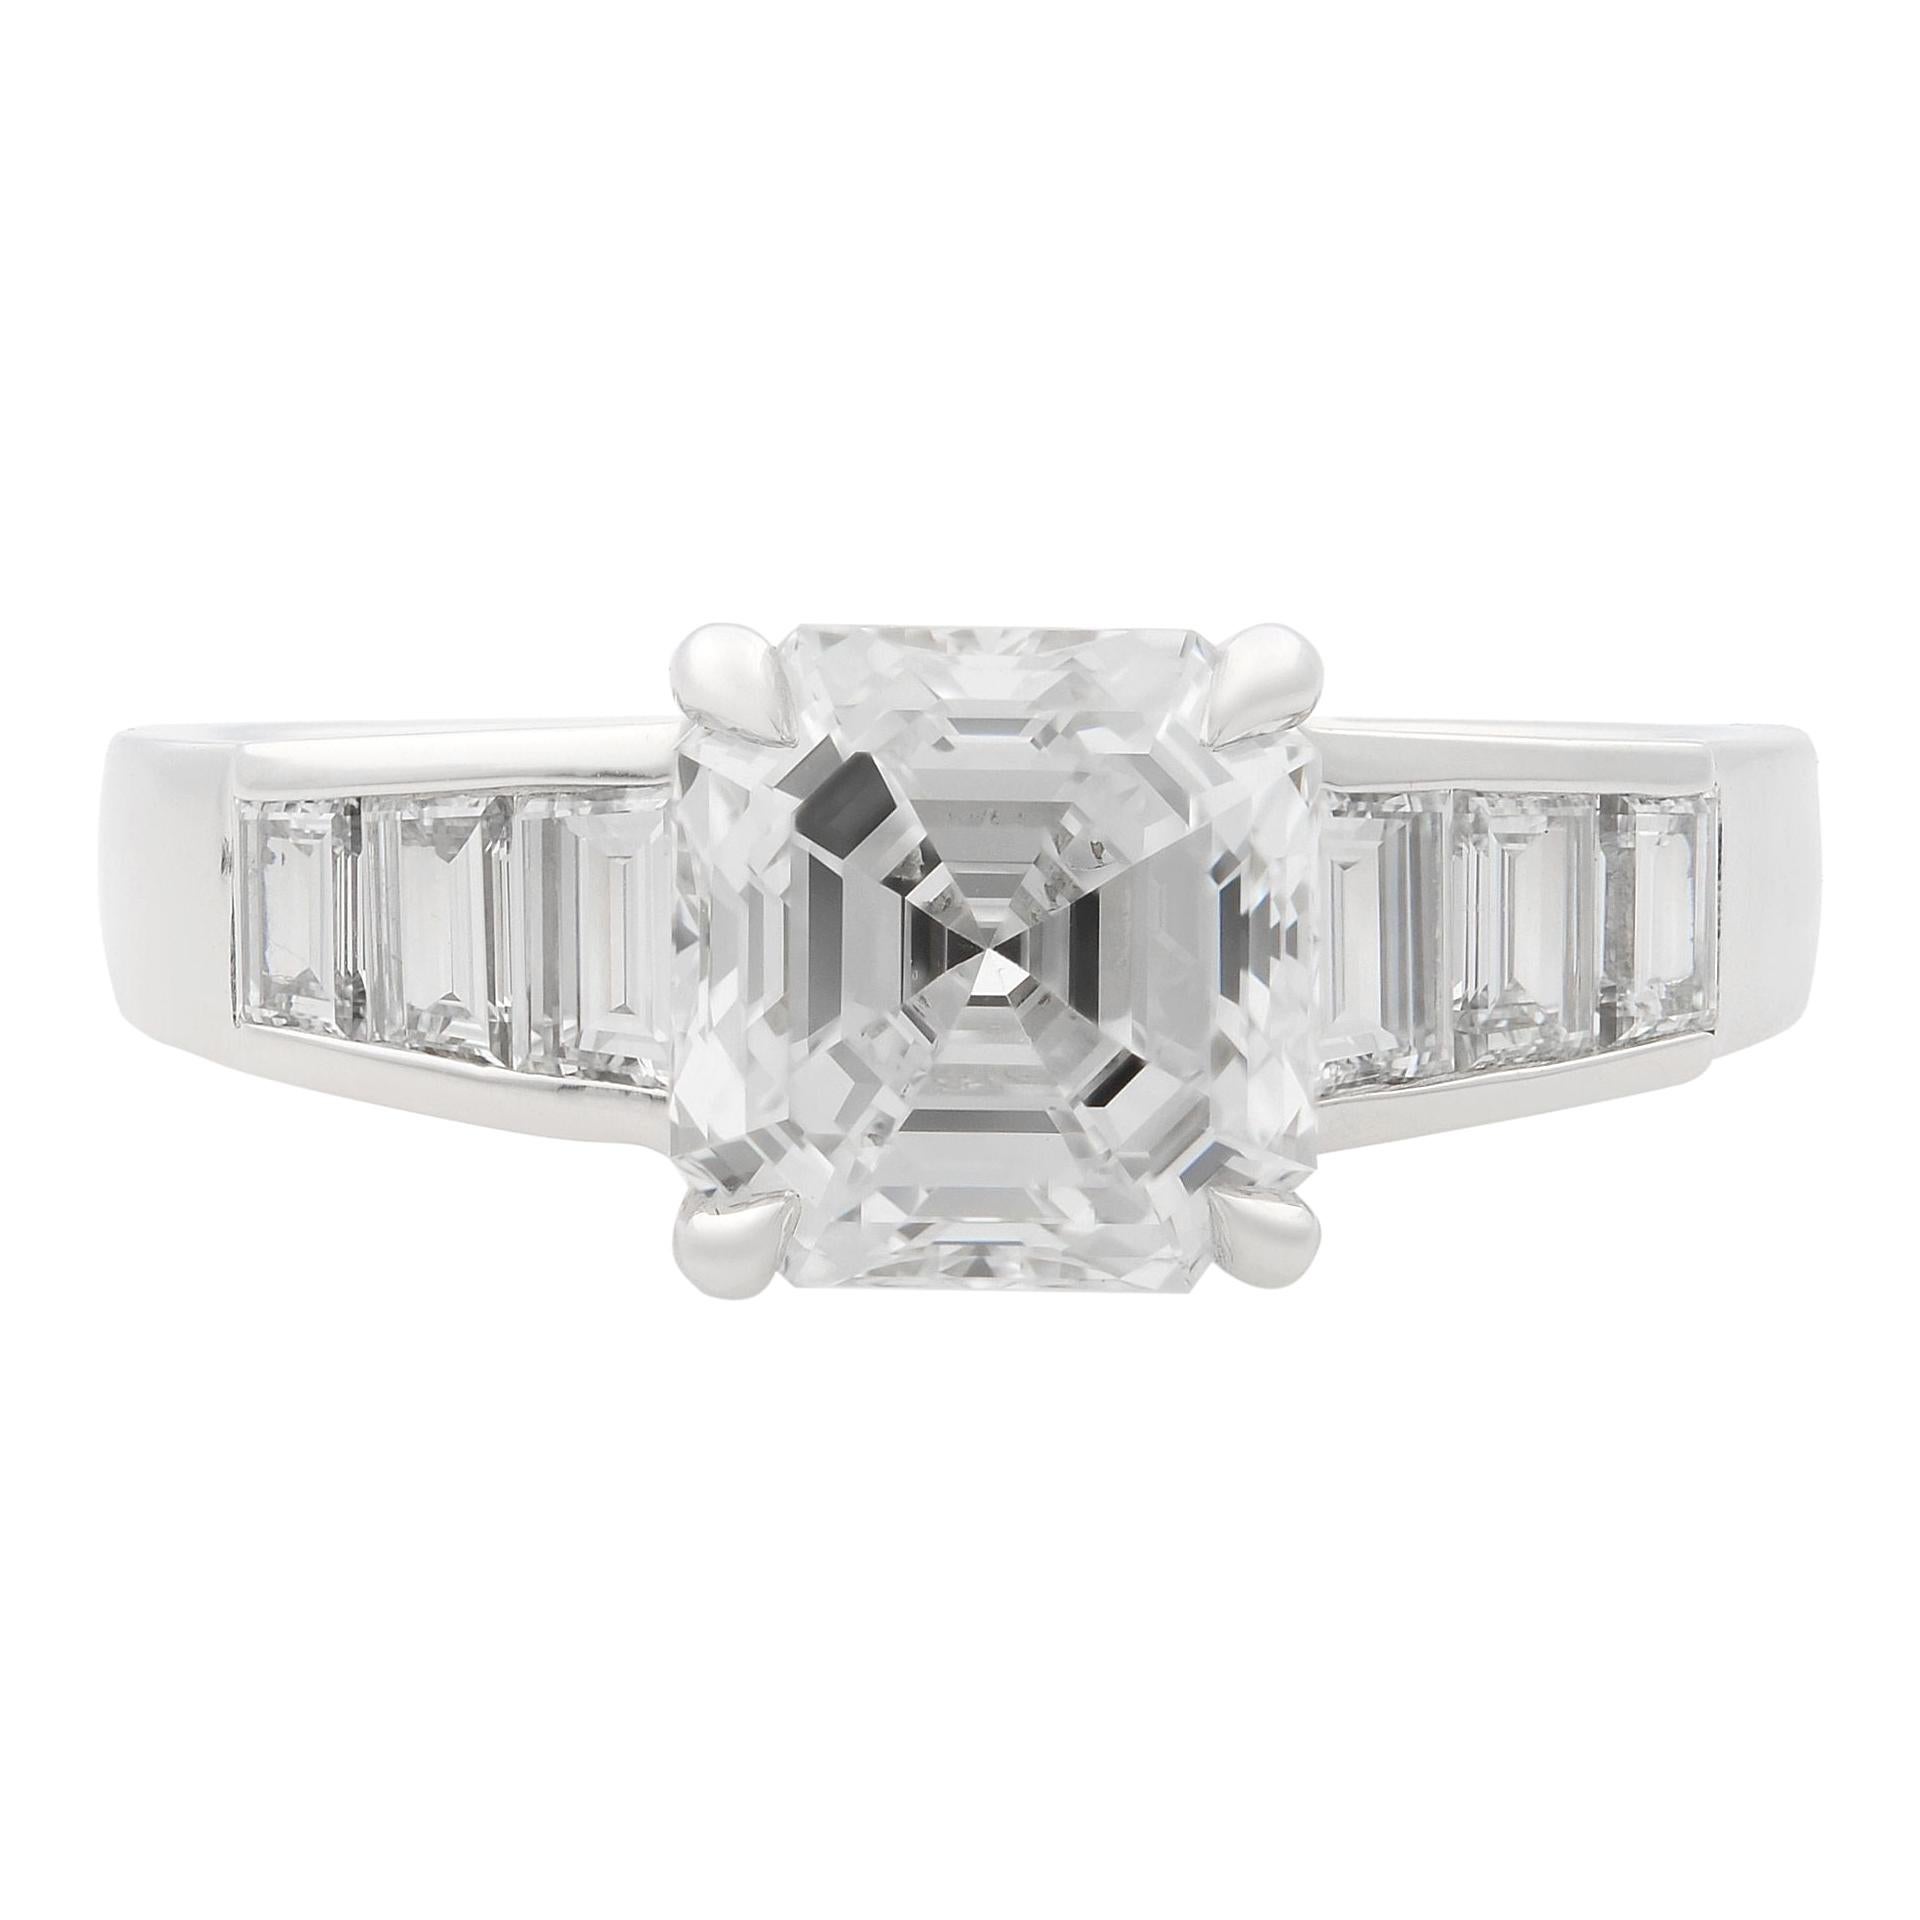 Rachel Koen 18 Karat White Gold Square Emerald Cut Diamond Ring 2.21 Carat For Sale